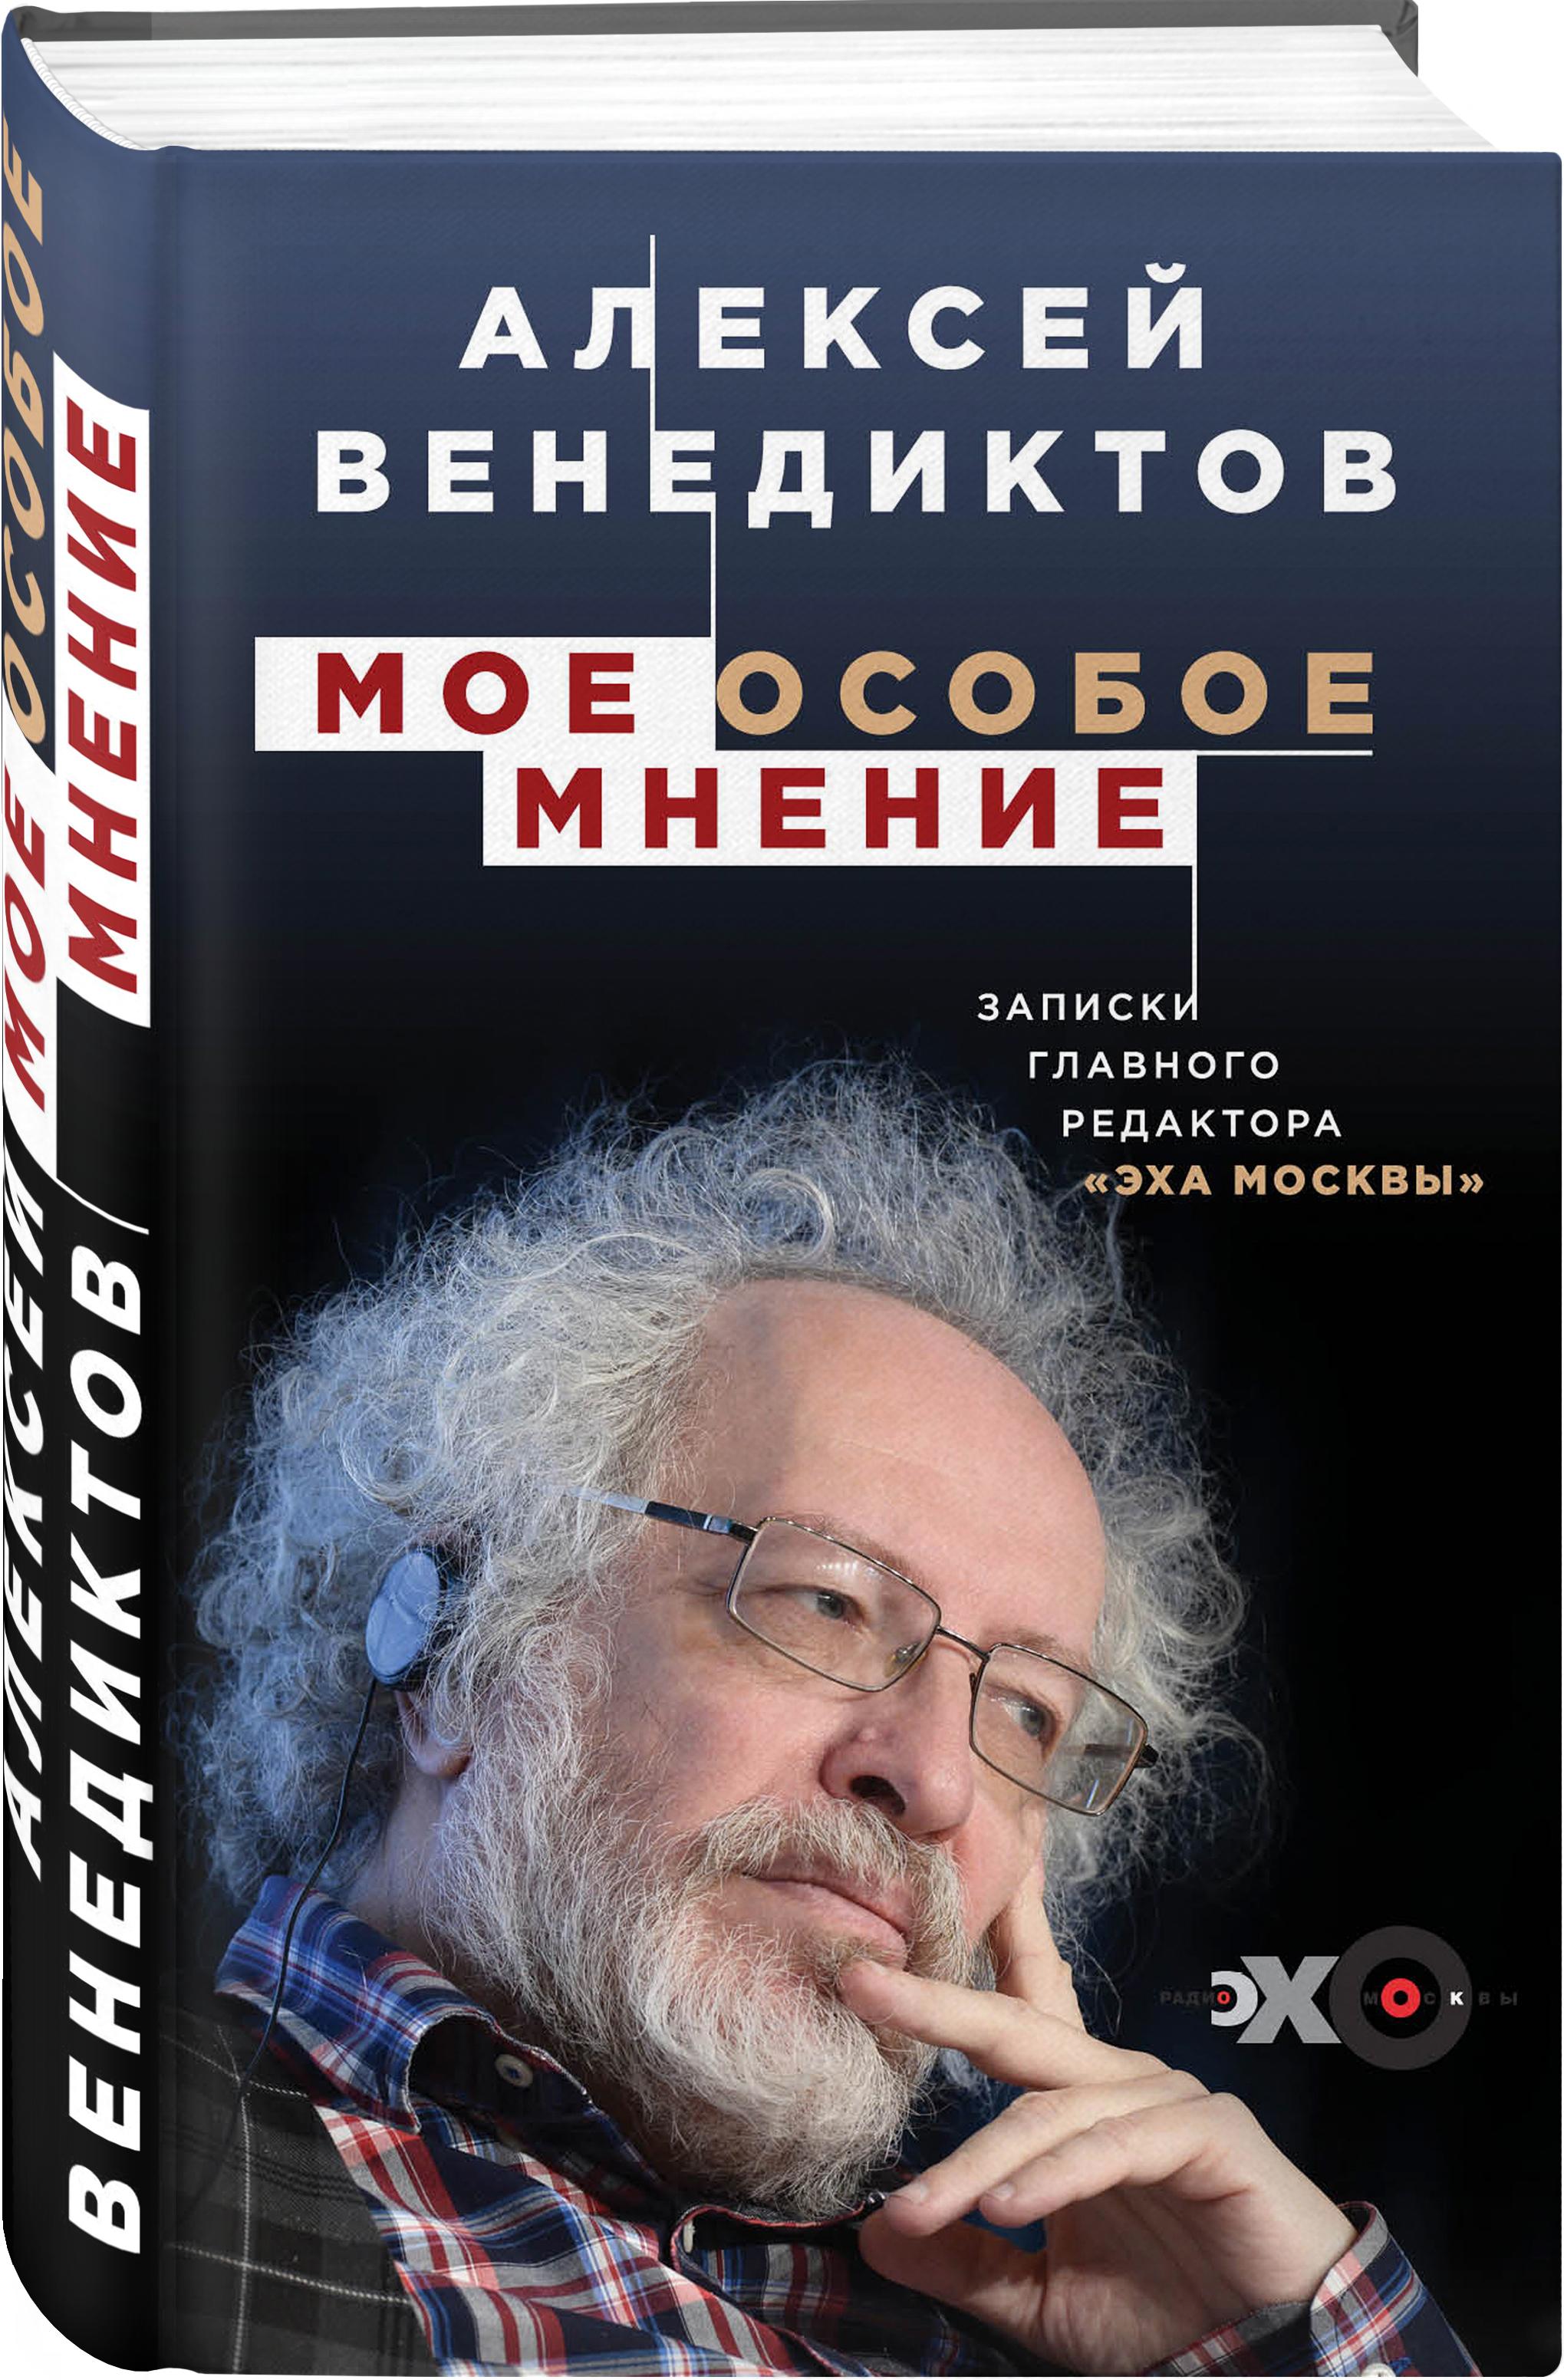 Книга известного журналиста Алексея Венедиктова